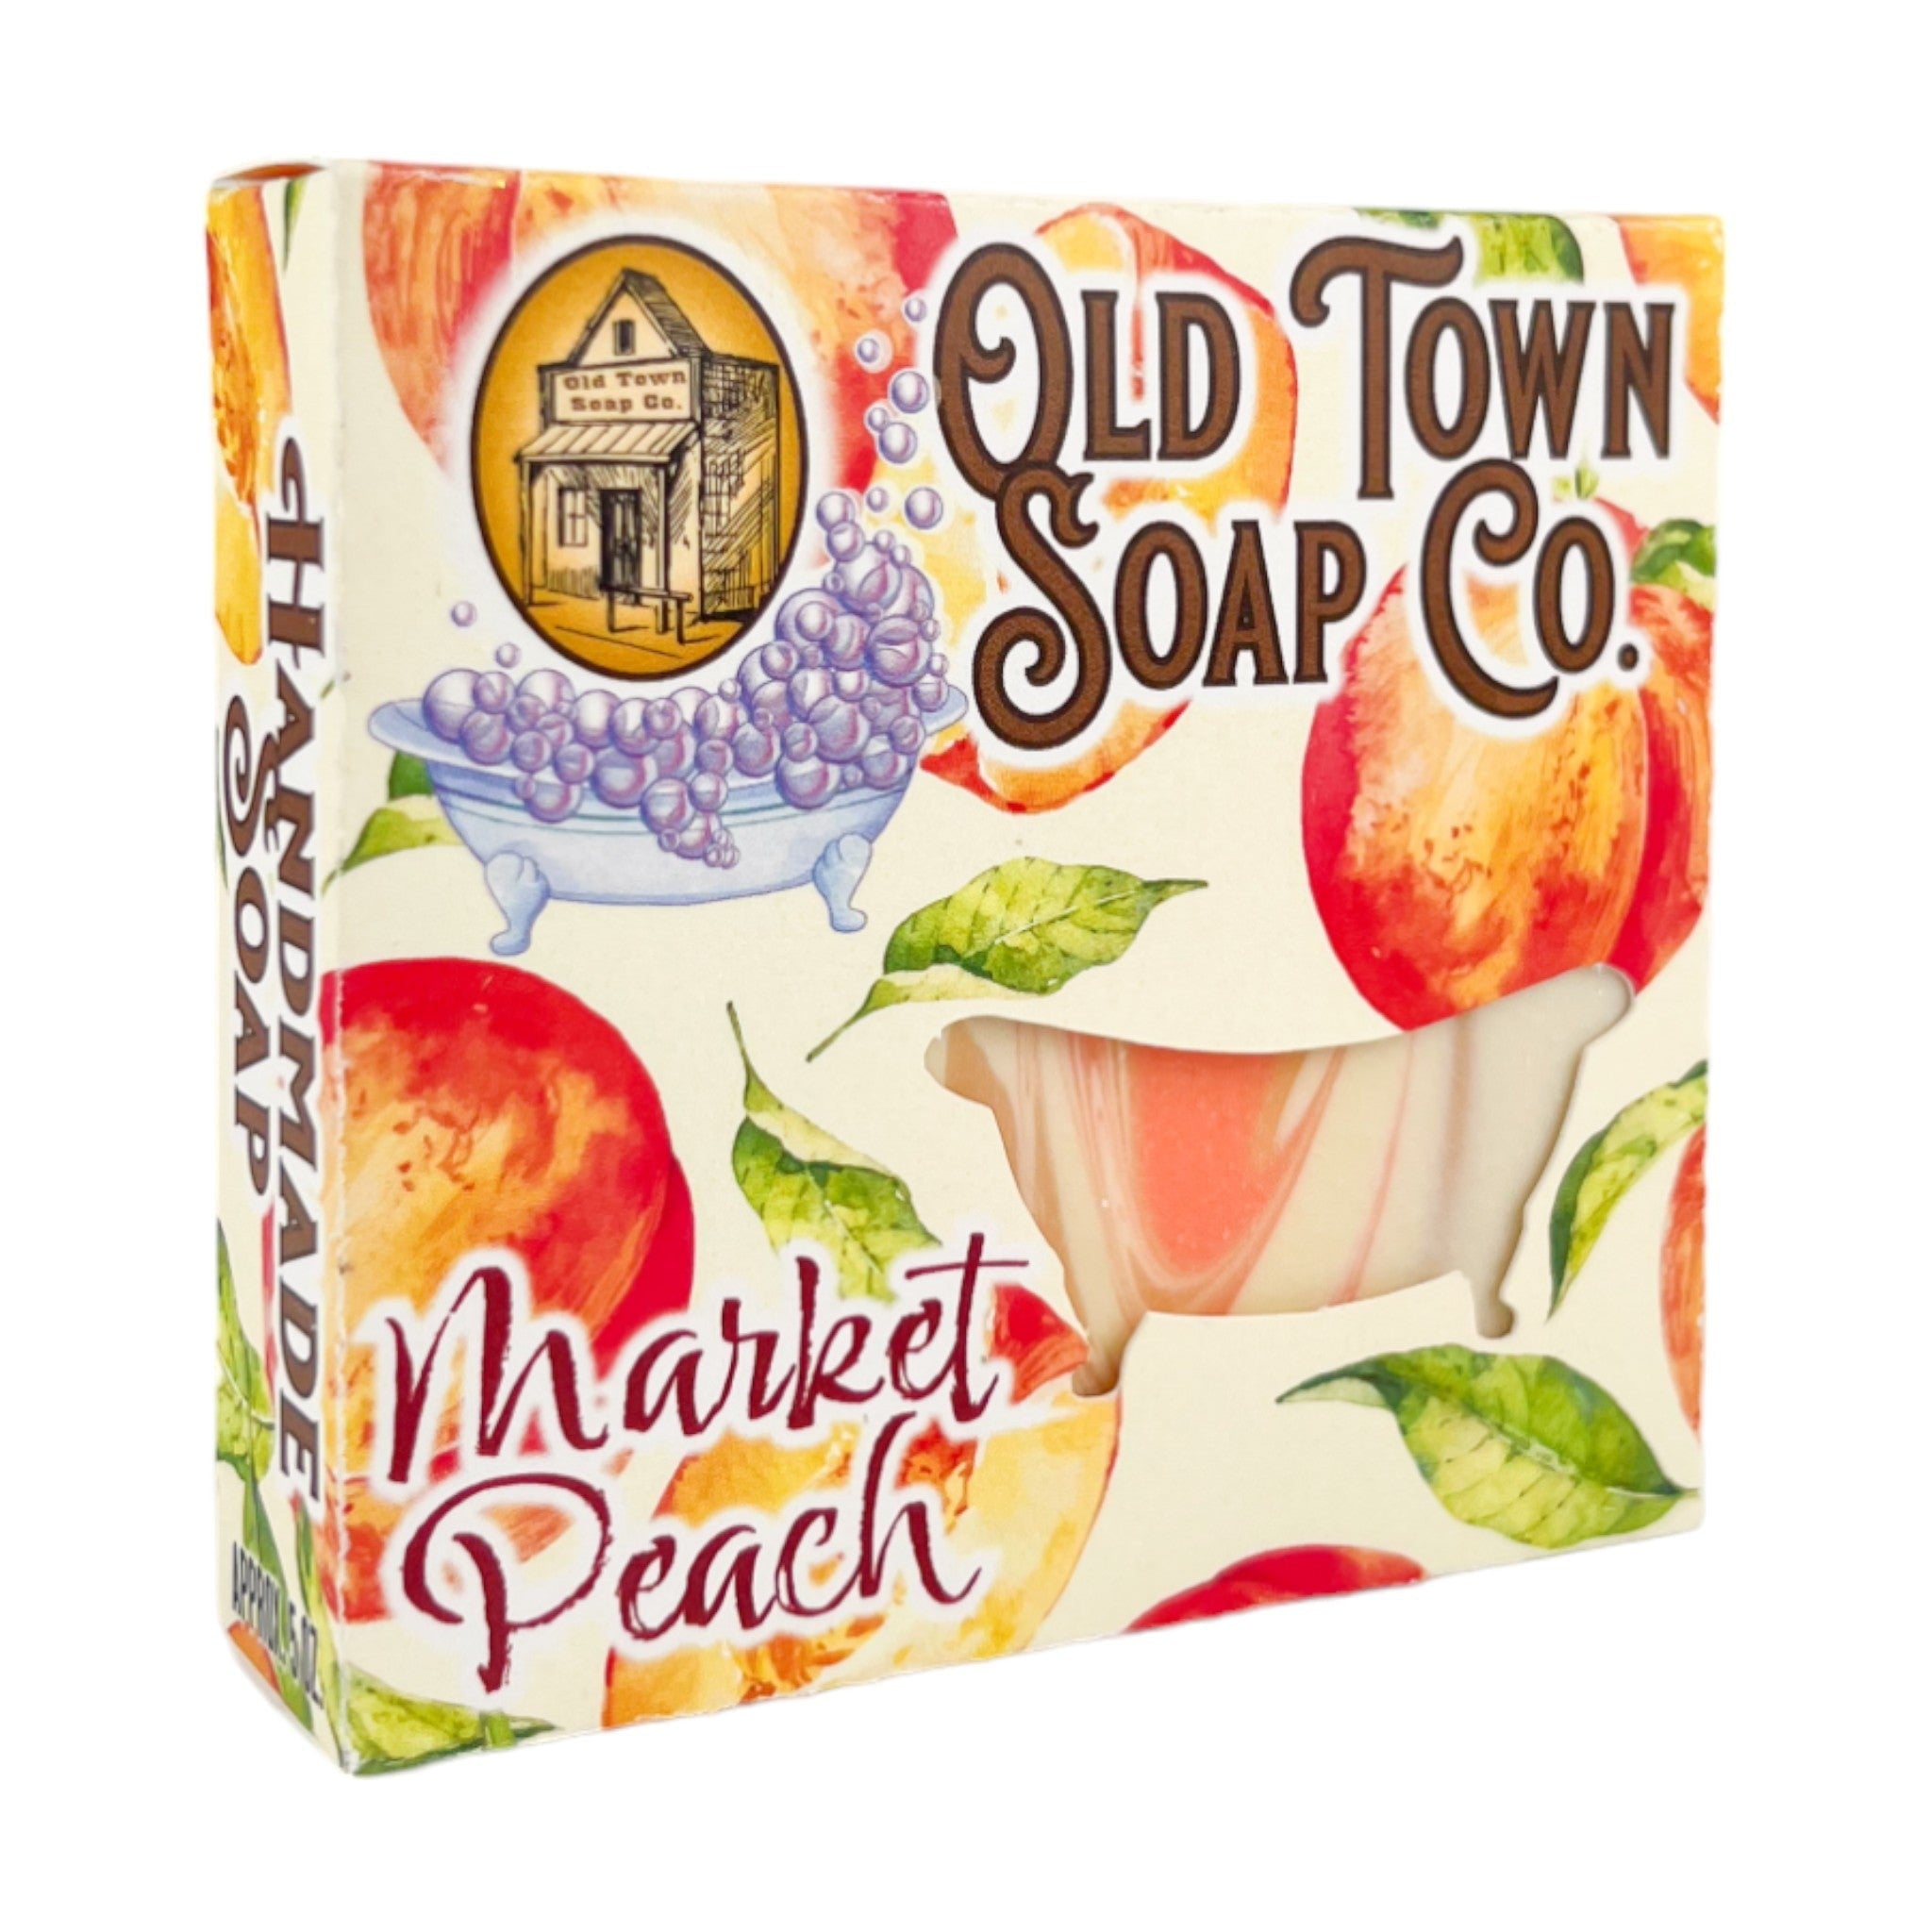 Market Peach -Bar Soap - Old Town Soap Co.